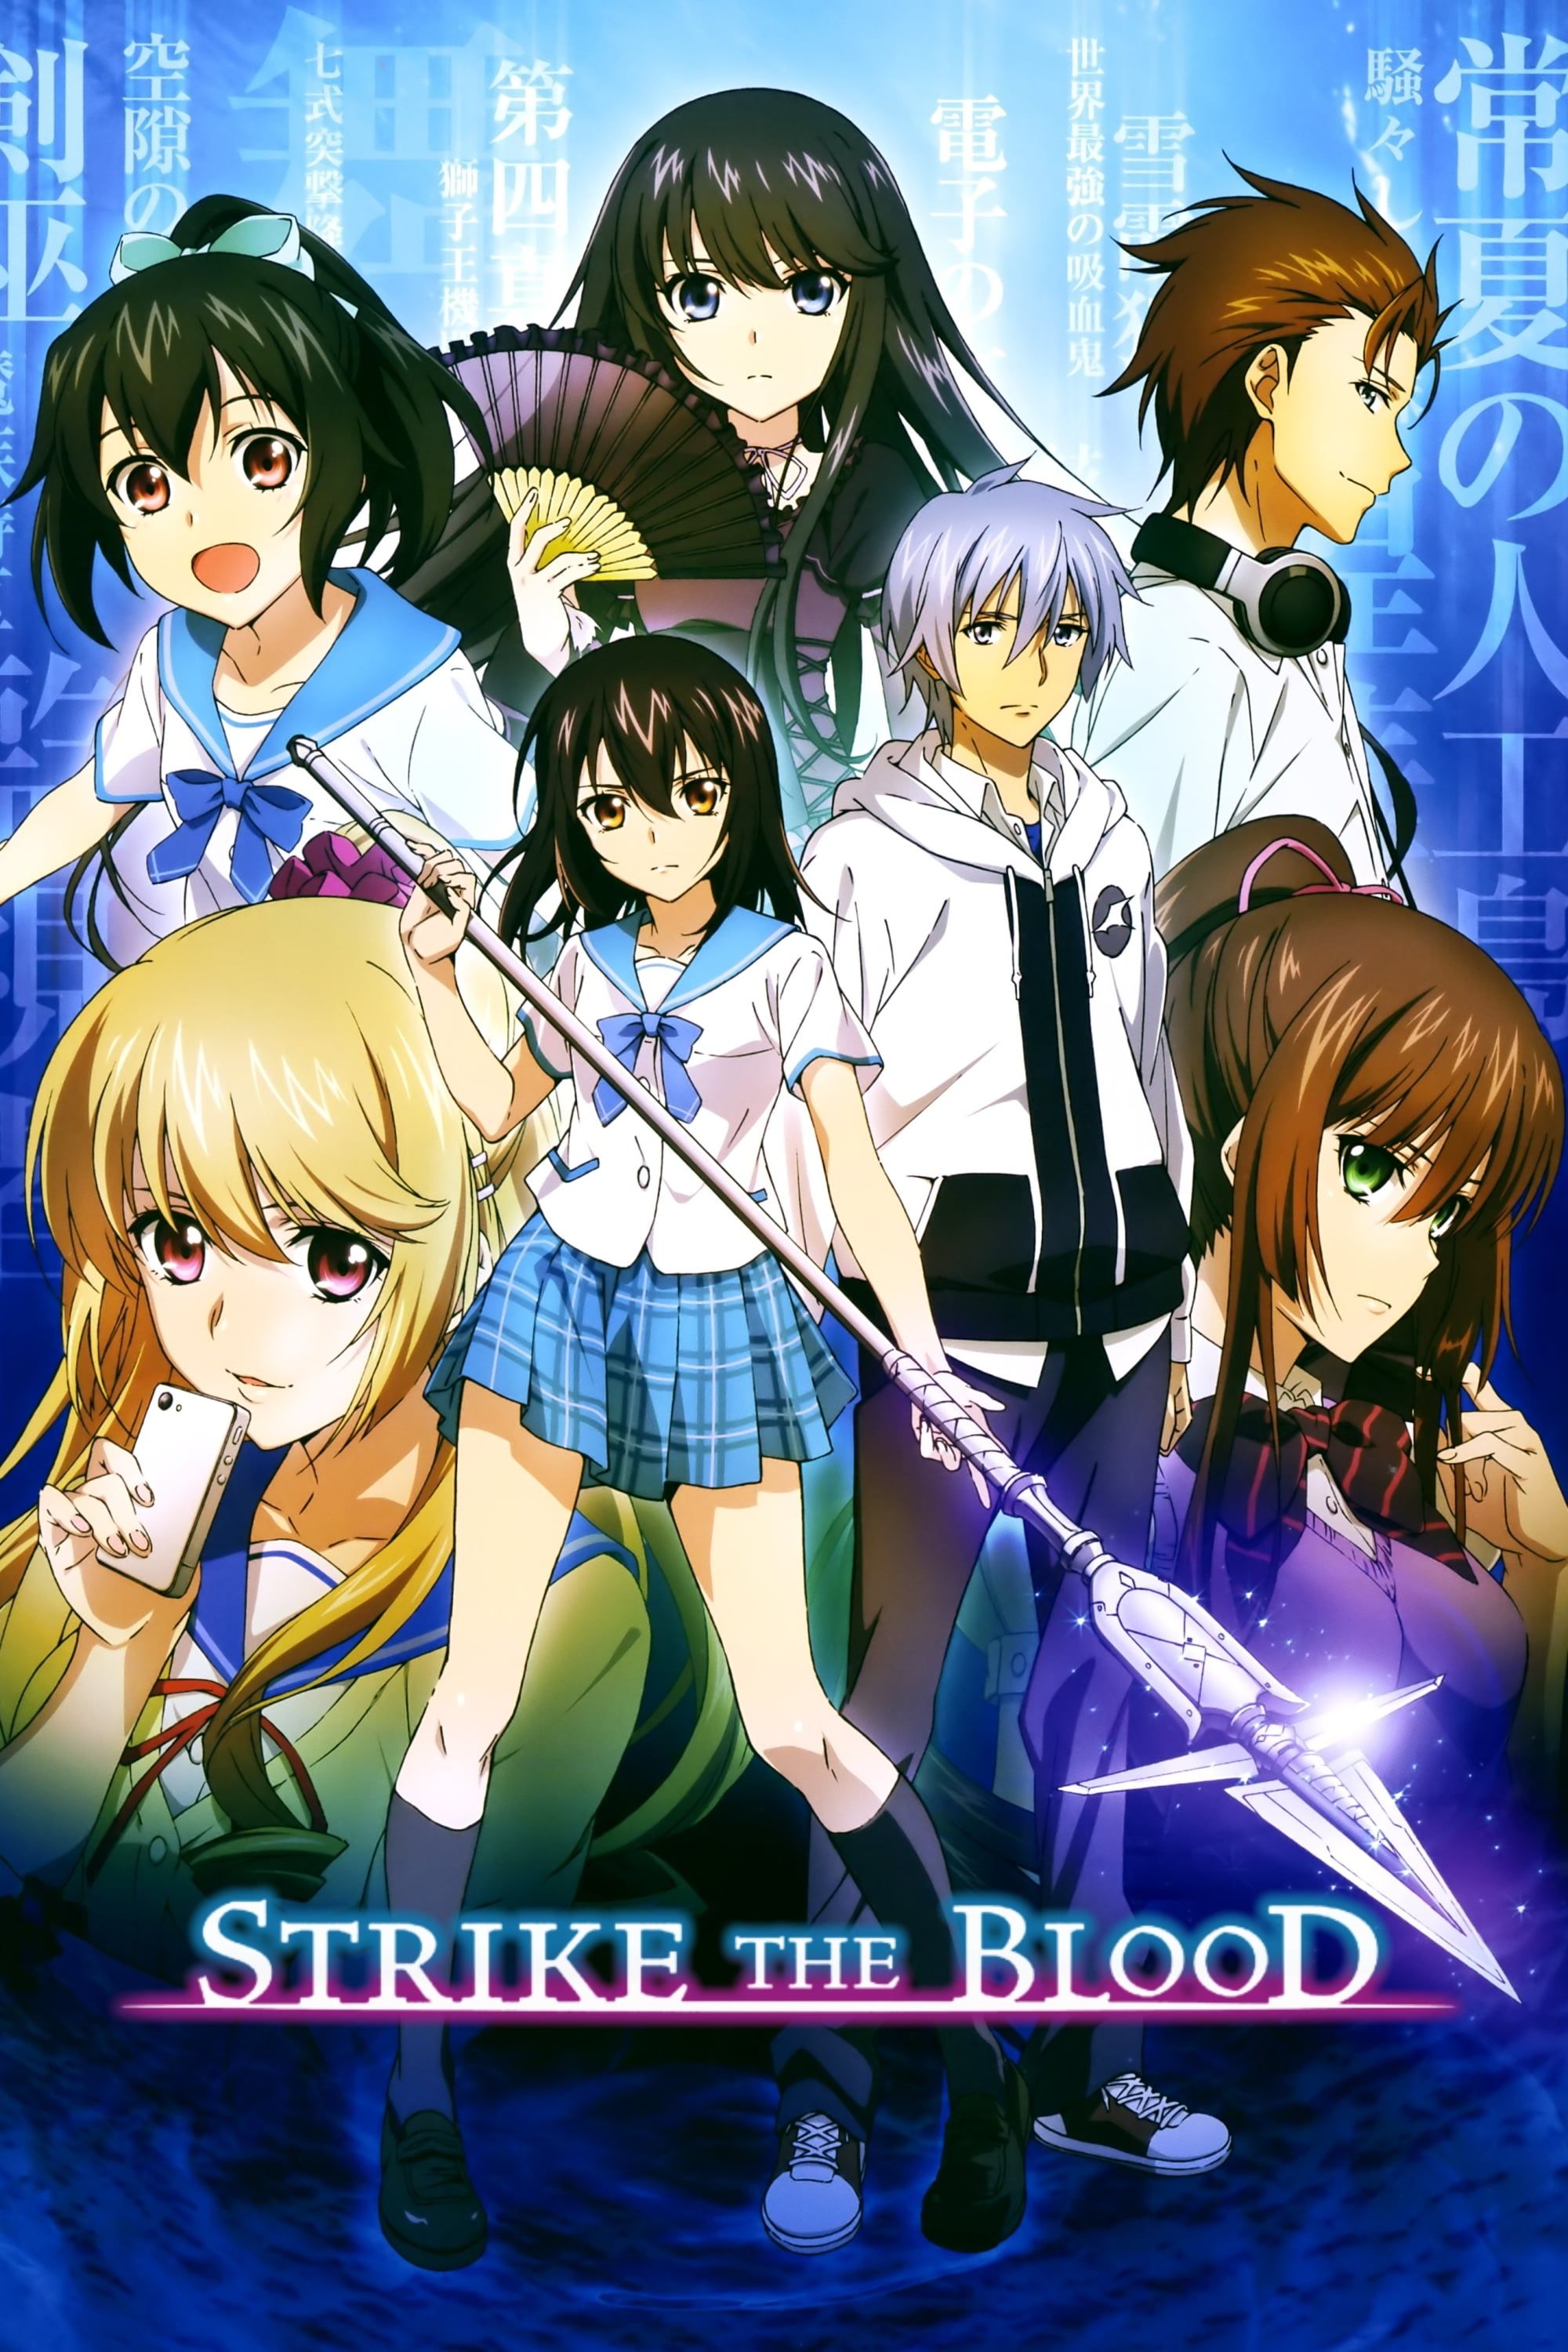 [Standard Version] Strike the Blood (TV) (Sub)